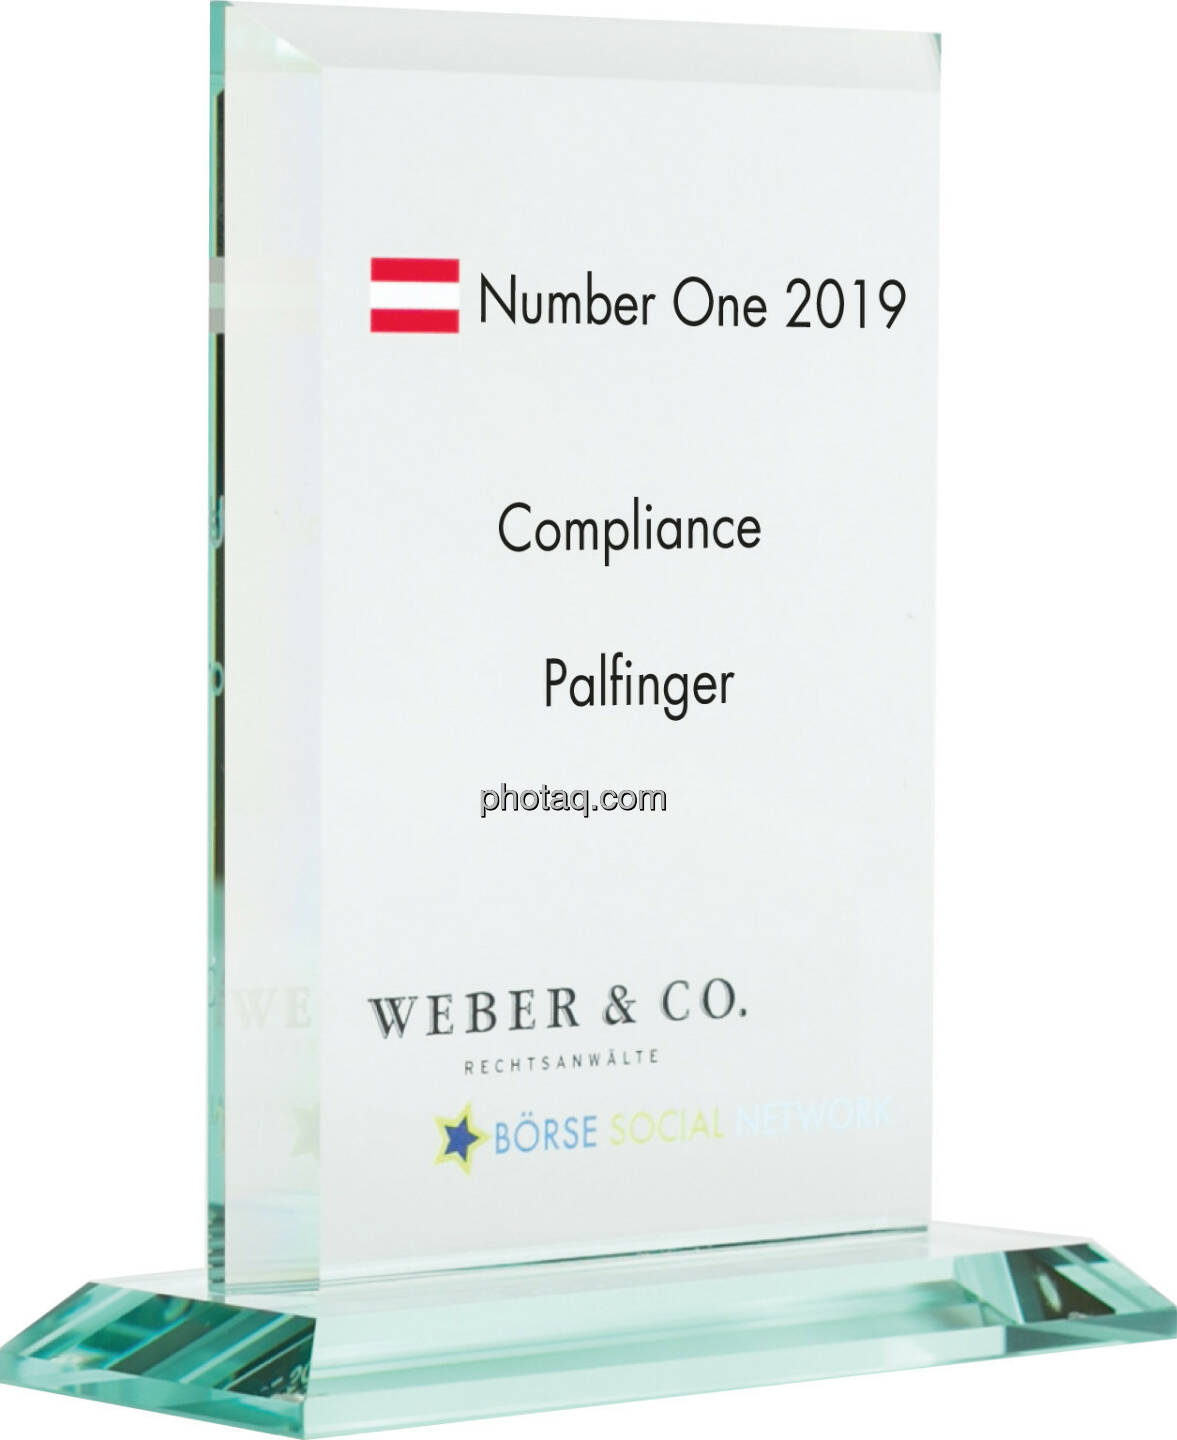 Number One Awards 2019 - Compliance Palfinger